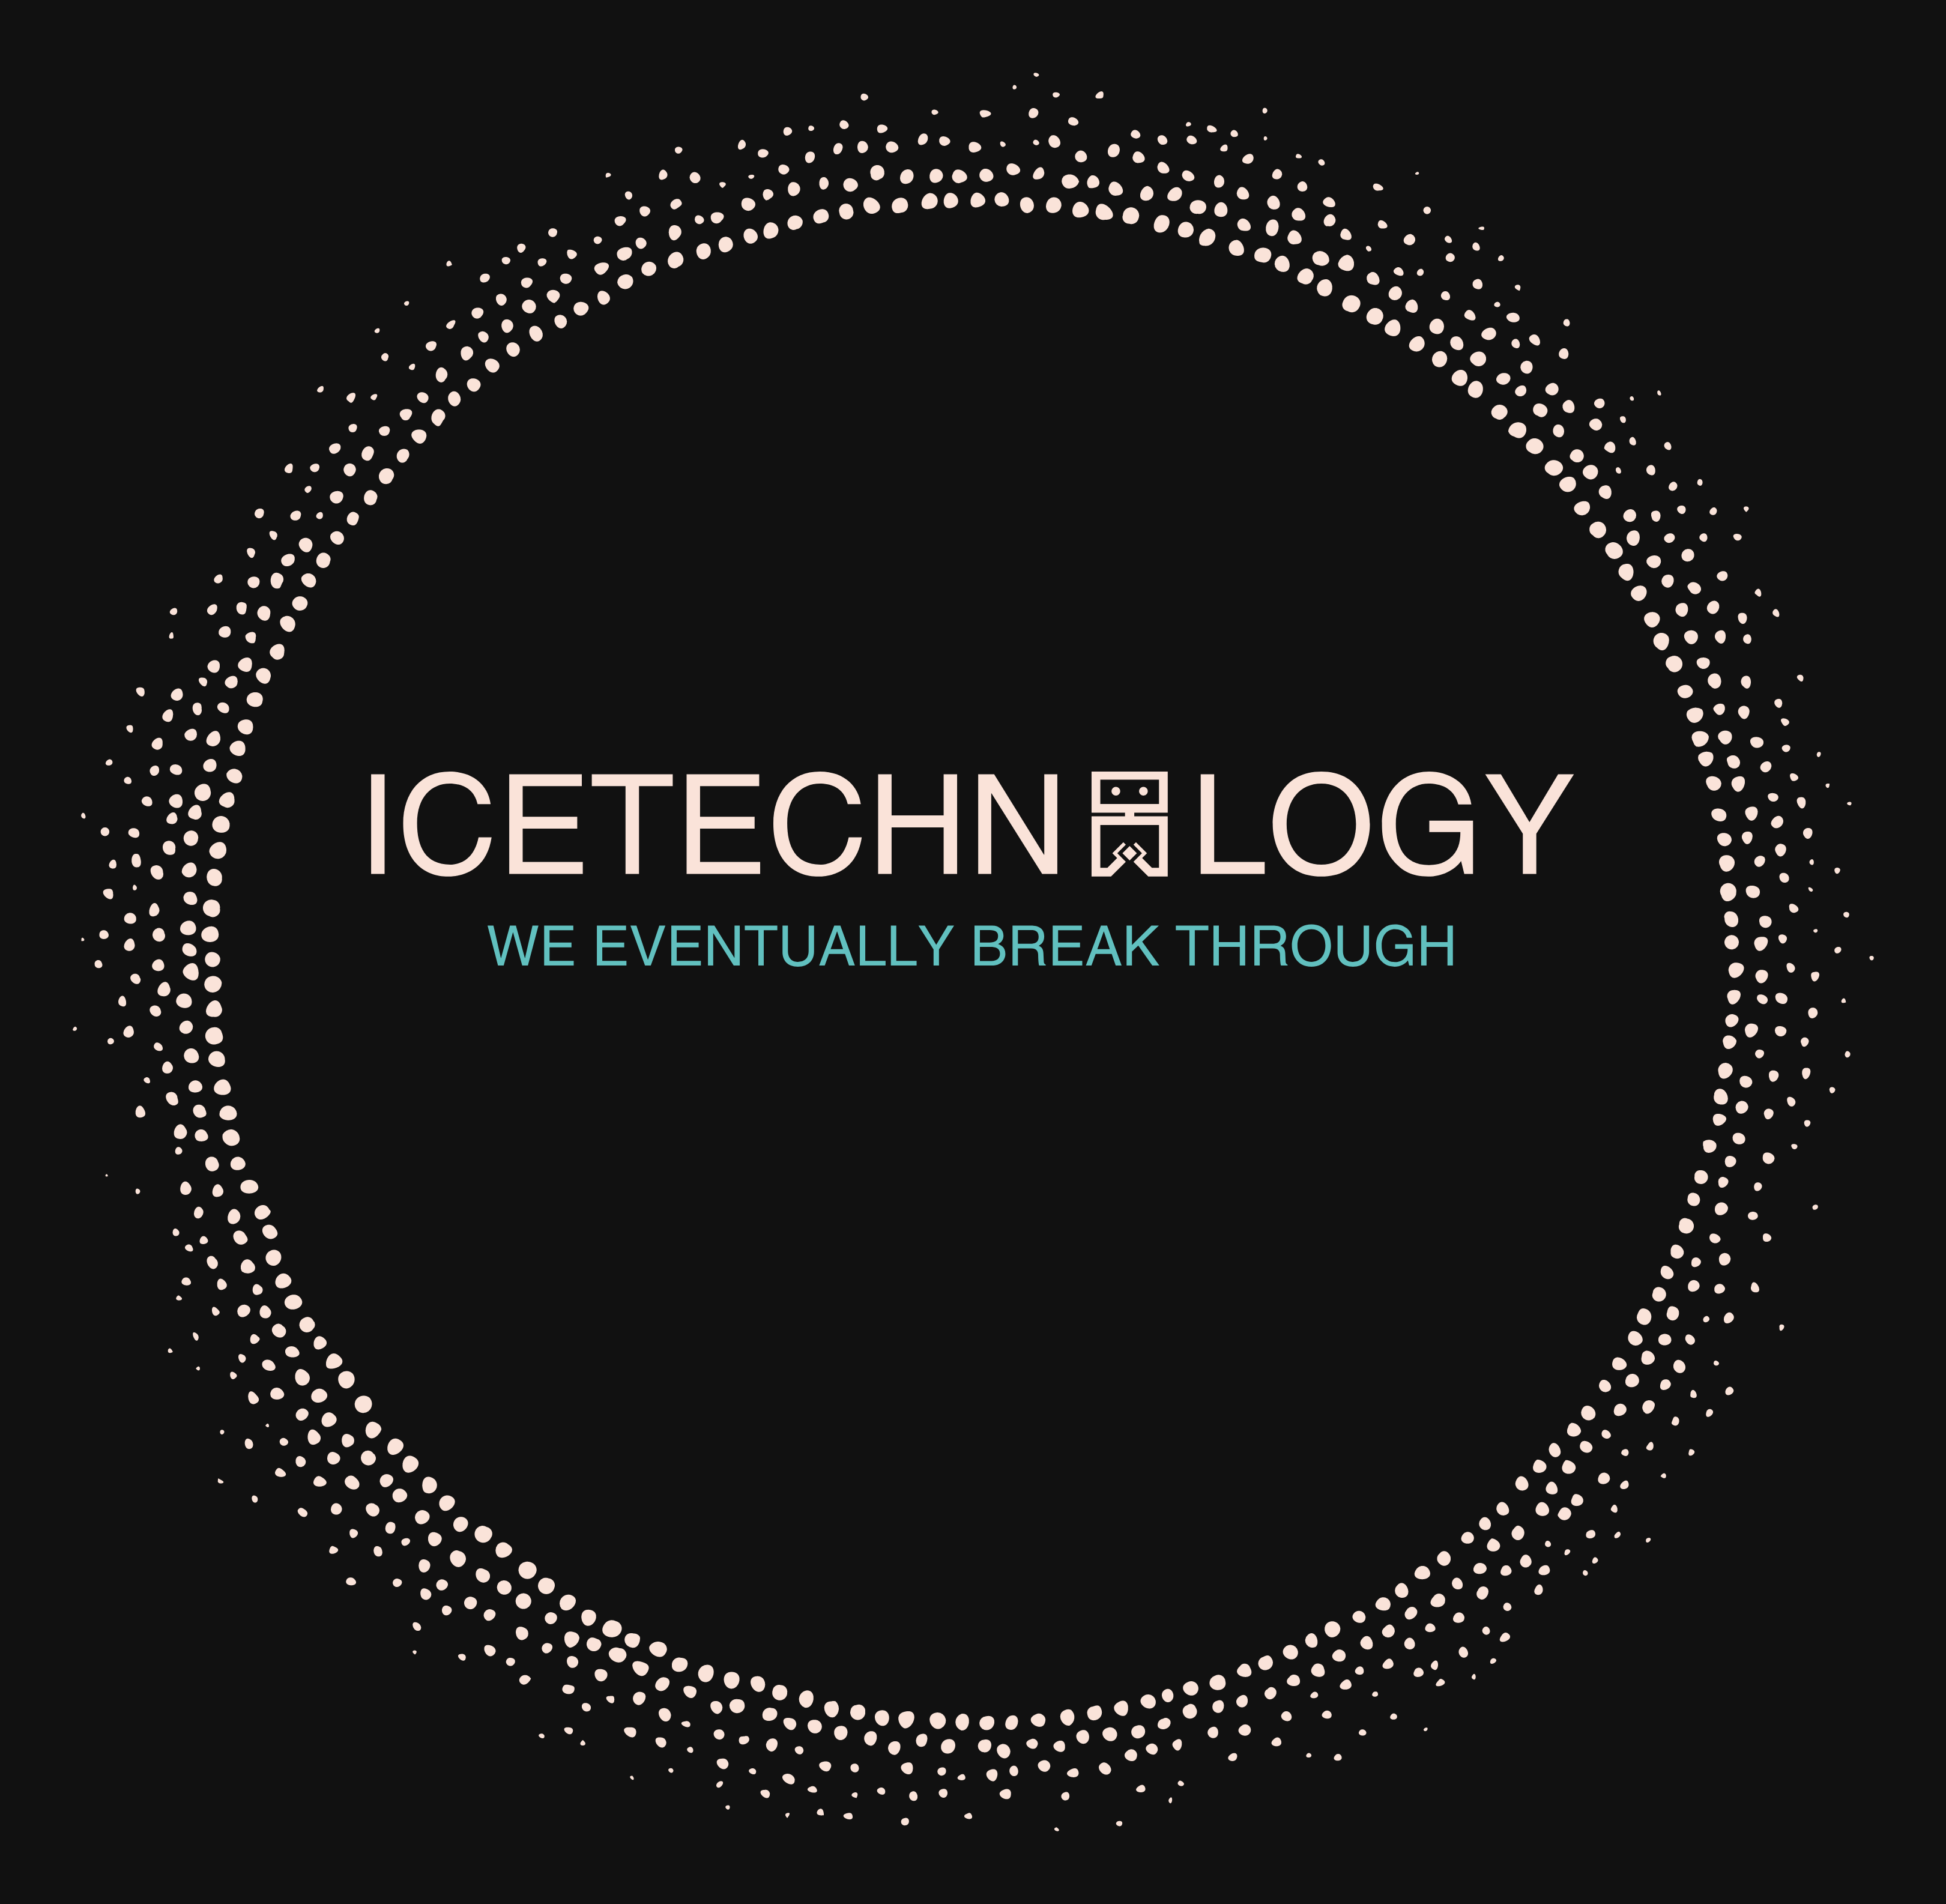 IceTechnology